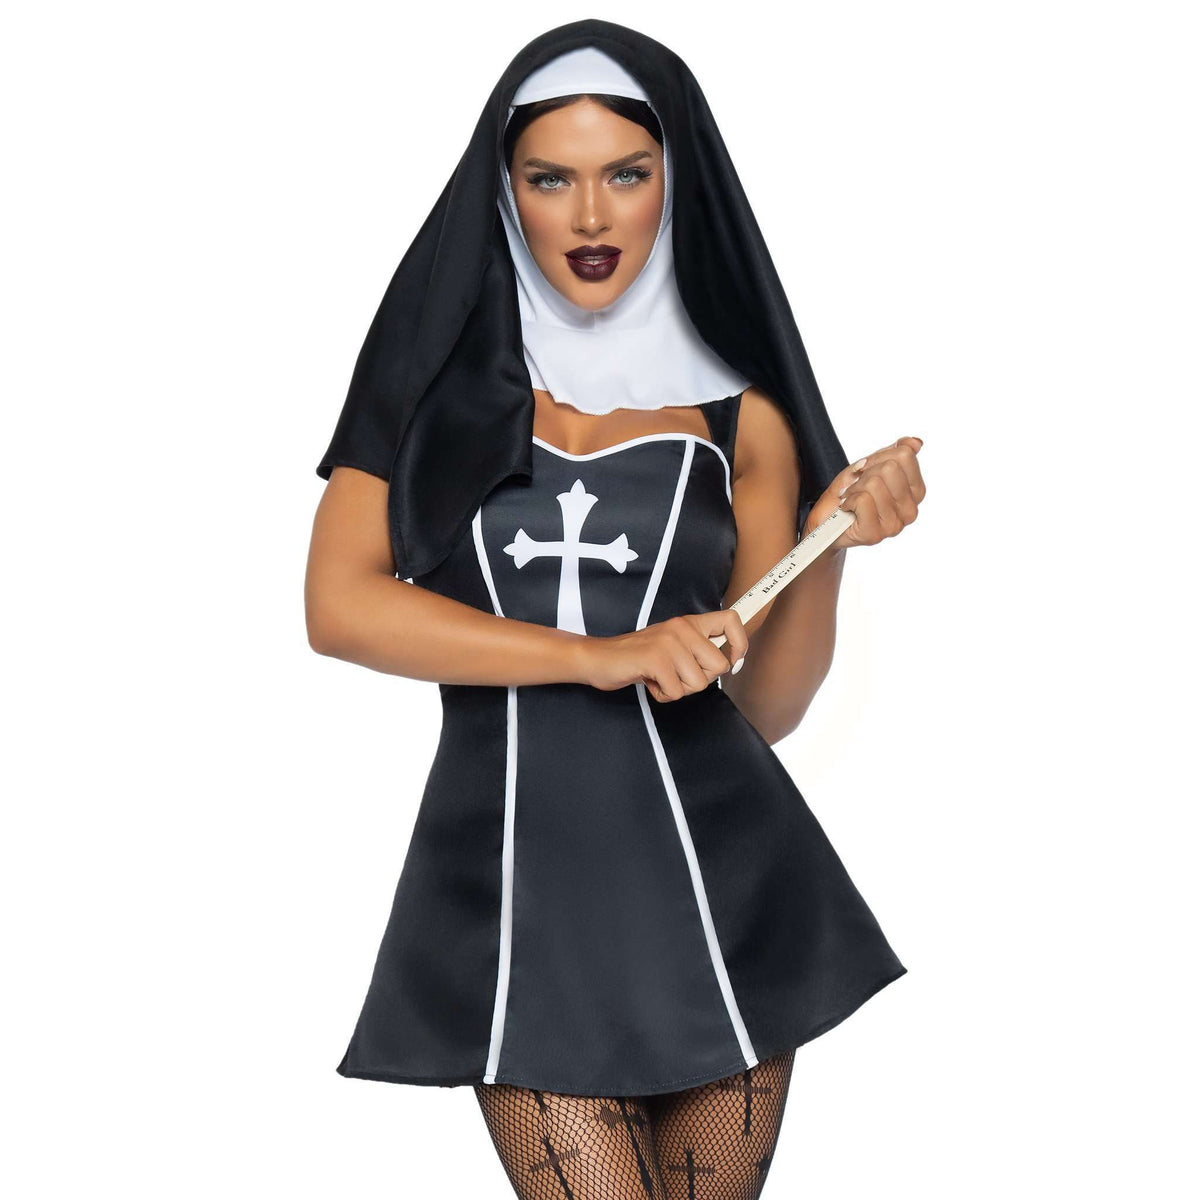 Naughty Nun Women's Sexy Costume